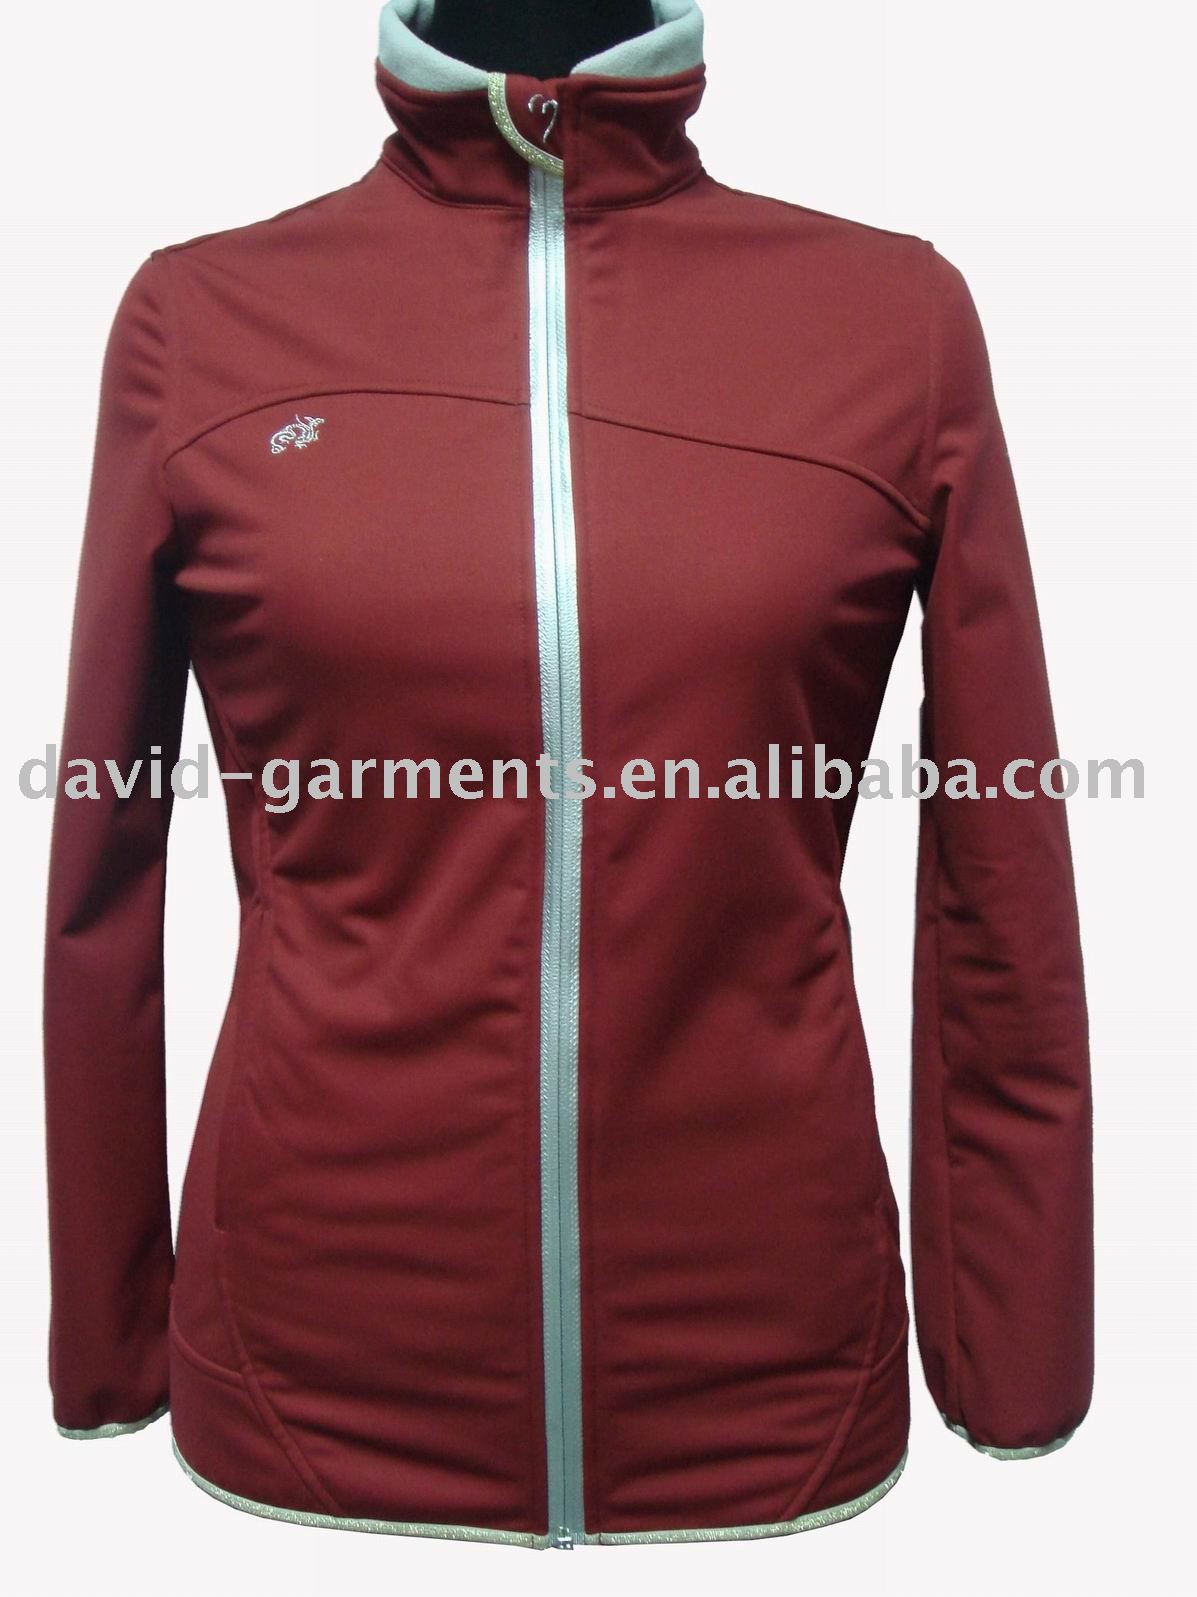 View Product Details: Casual Women's sportswear